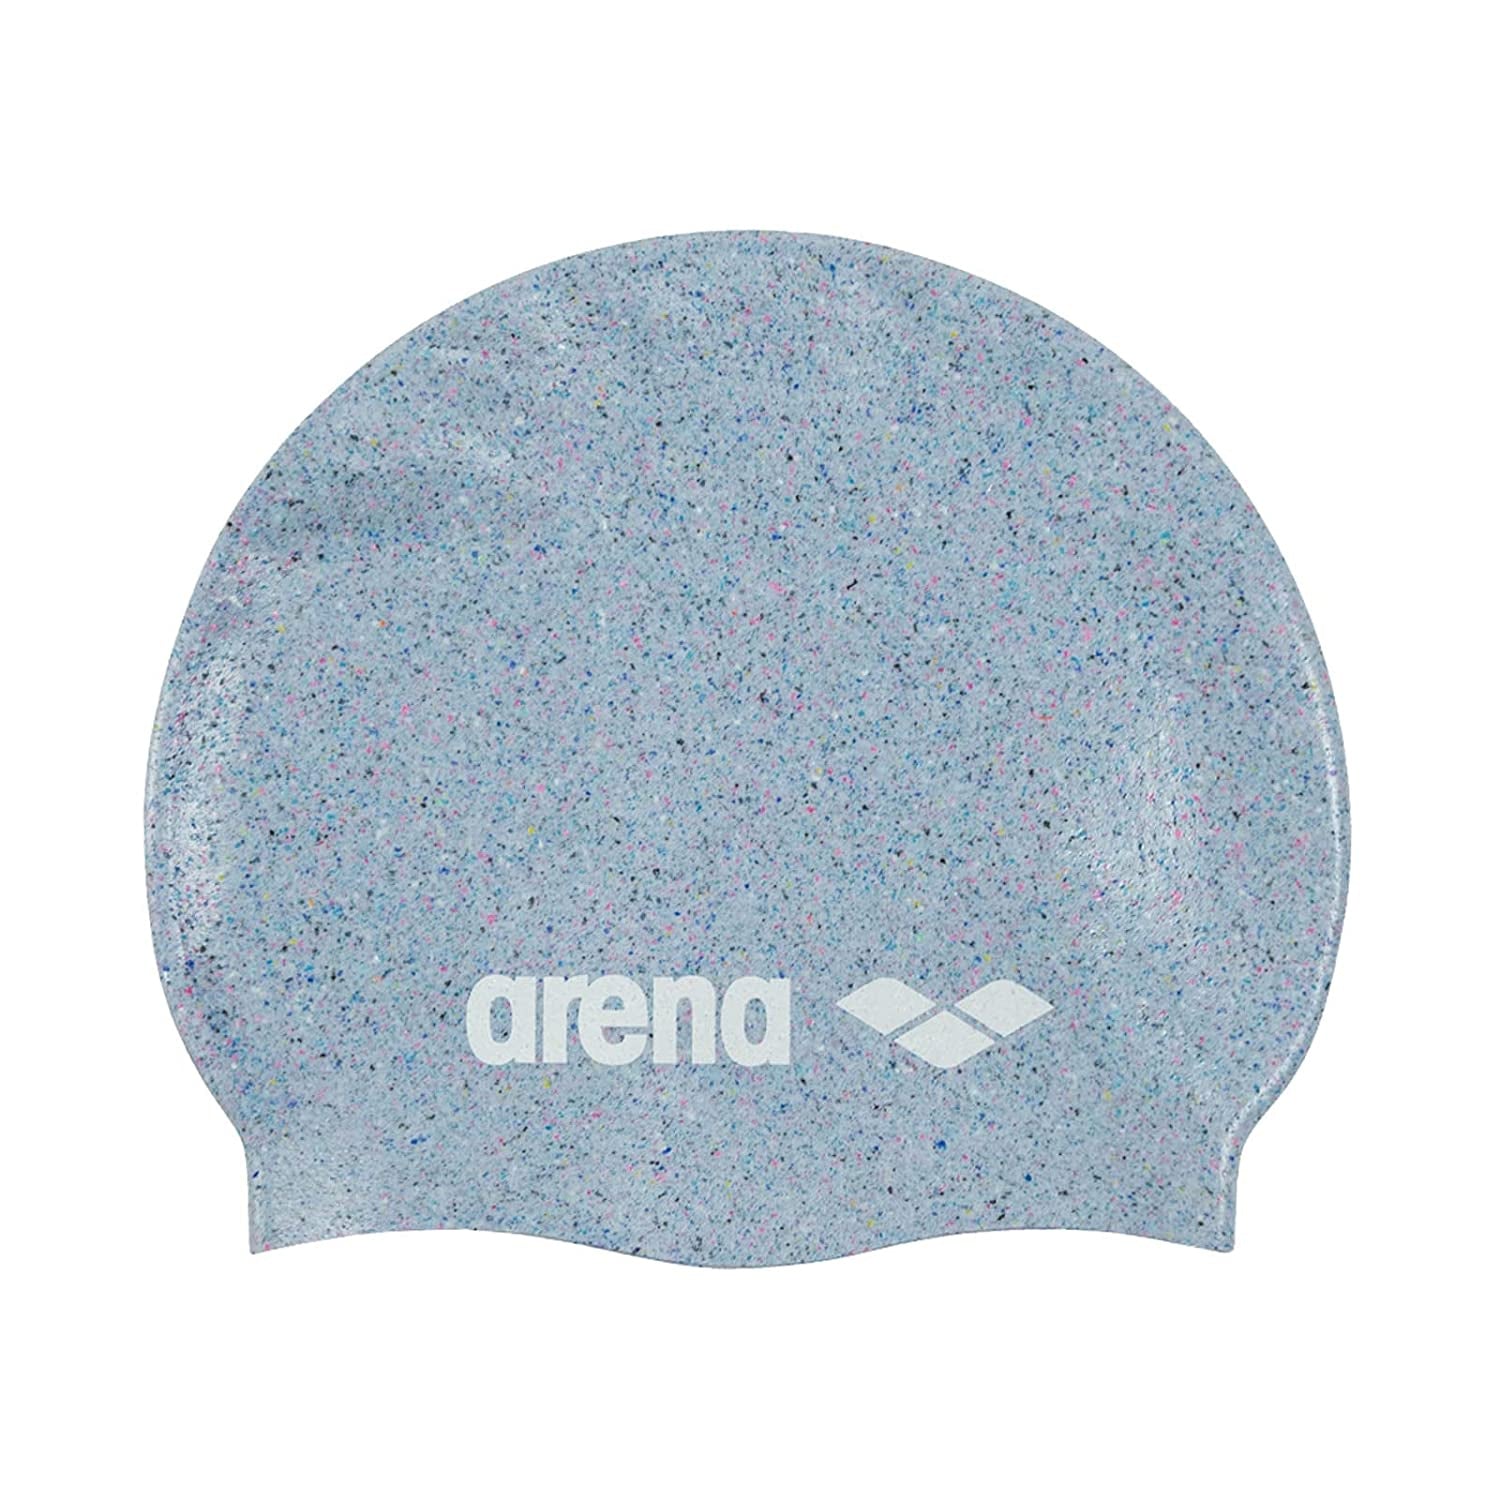 Arena Silicone Swim Cap, Adult - Best Price online Prokicksports.com